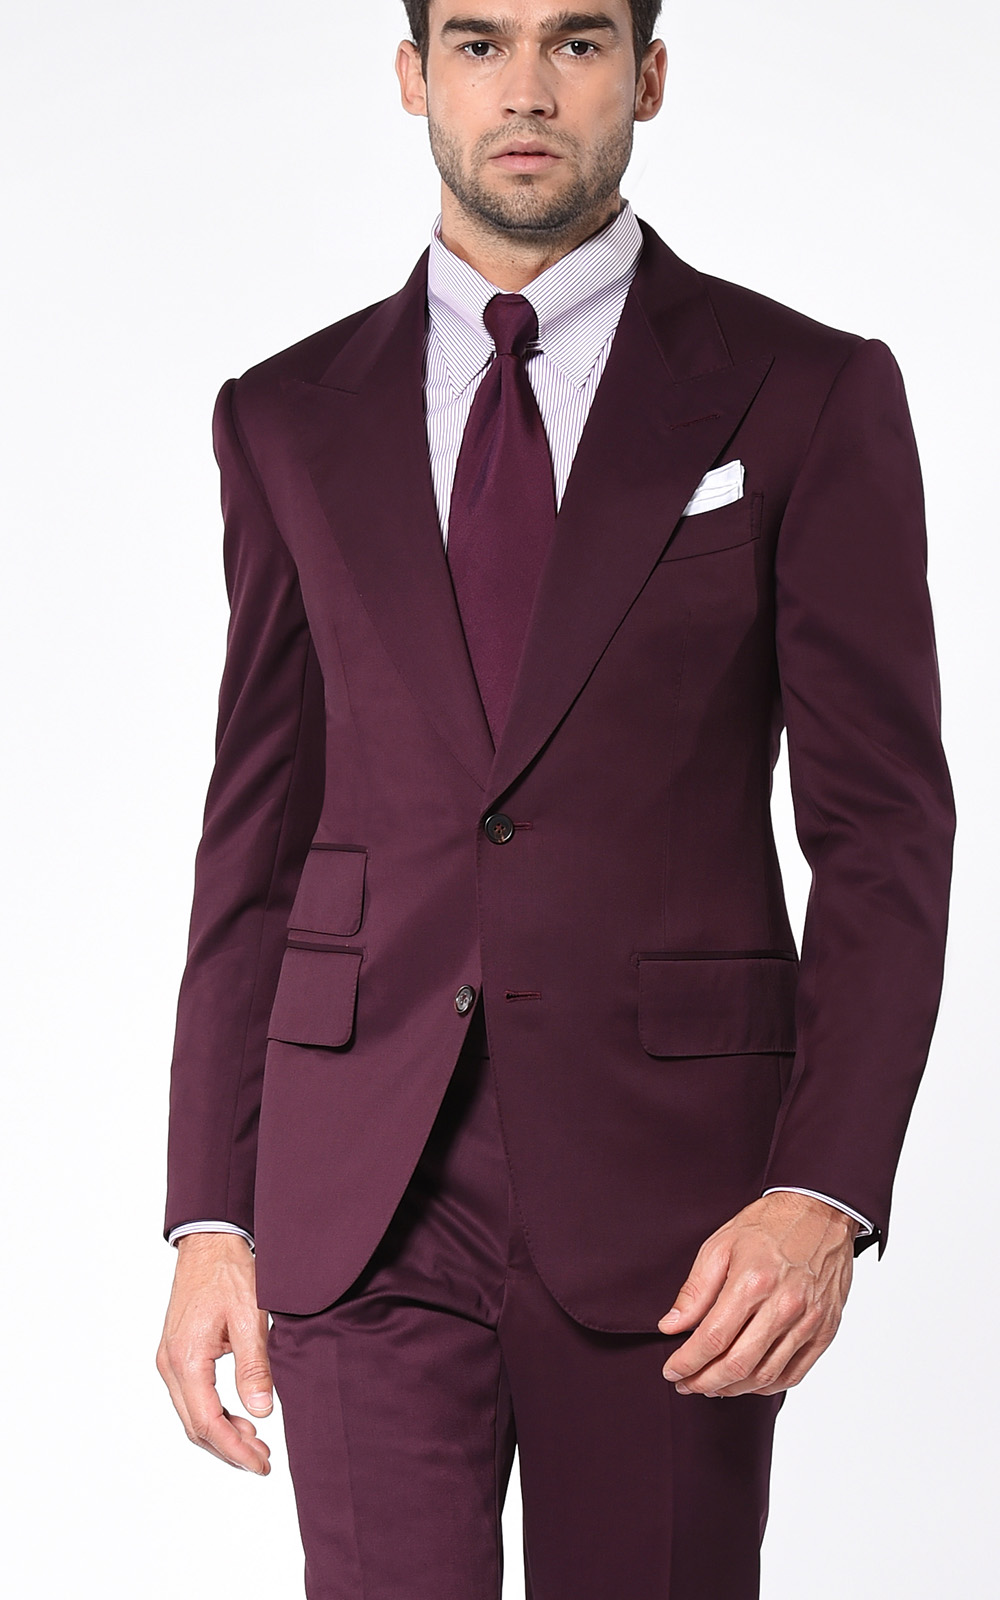 Albany synd Rummelig Bordeaux Twill Signature Bespoke Suit